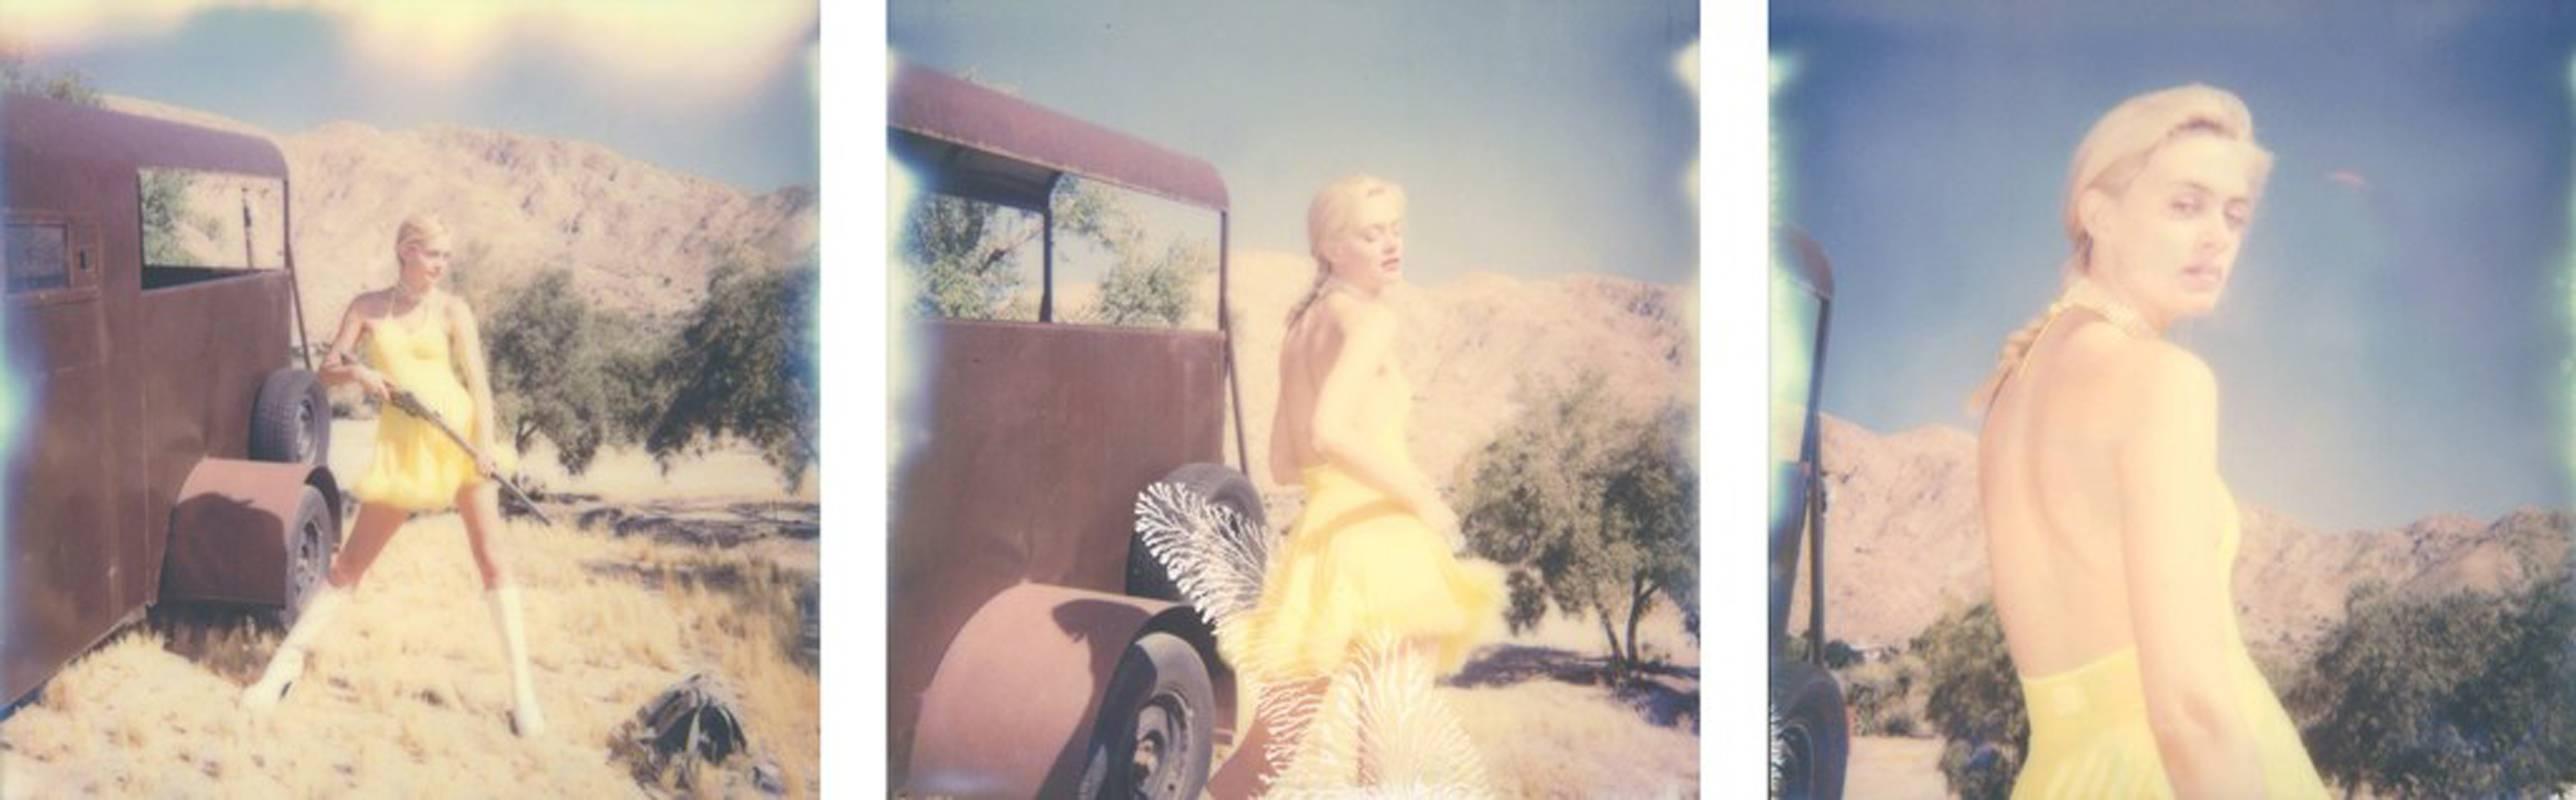 Marilyn (Heavenly Falls) - triptych - mounted